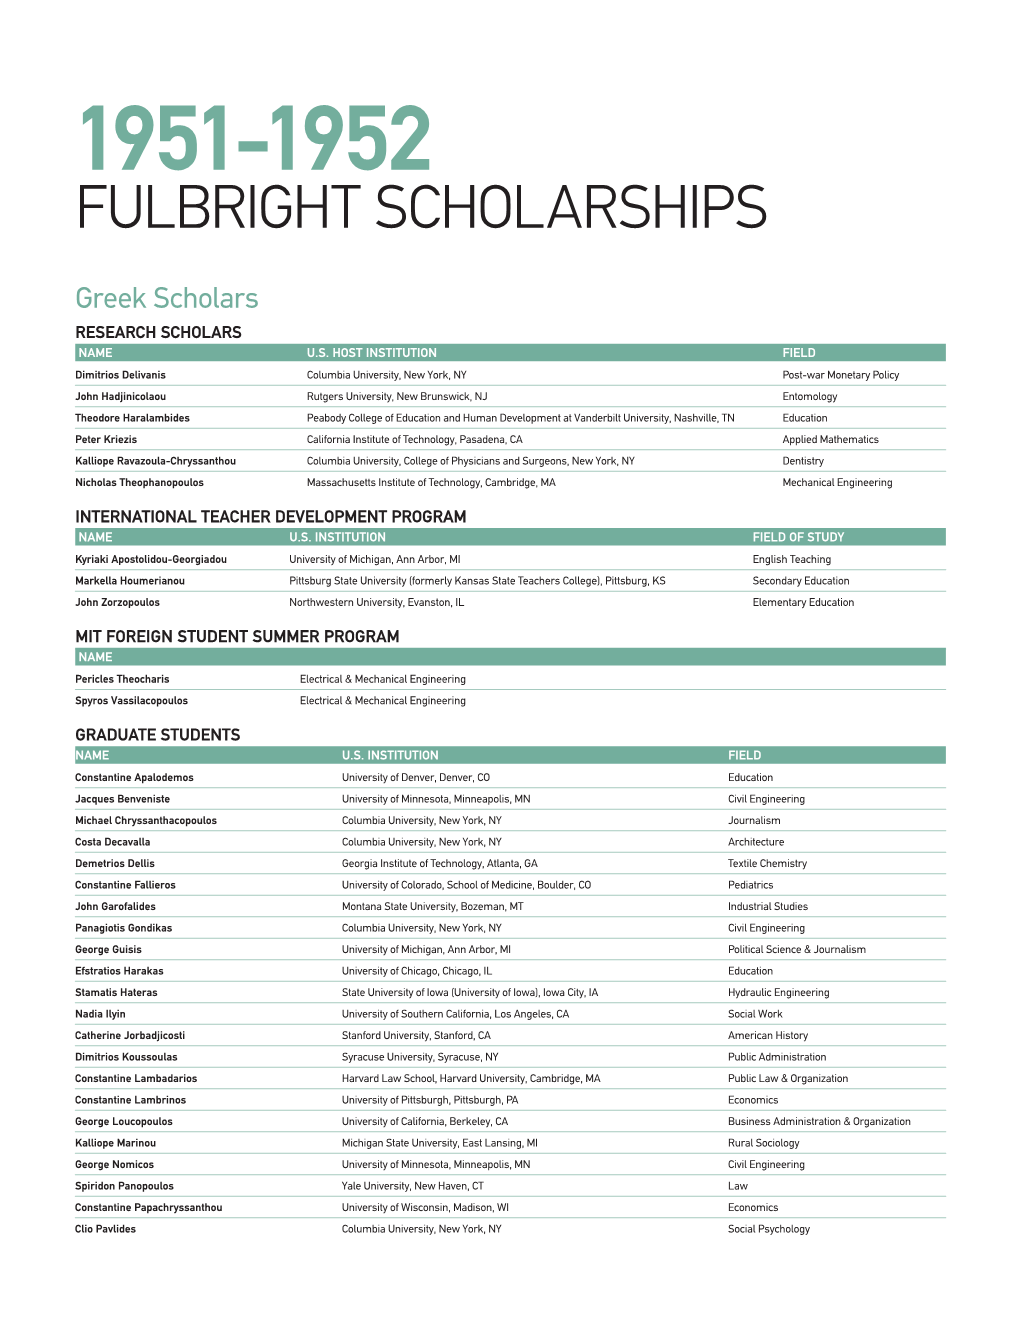 1951-1952 Fulbright Scholarships